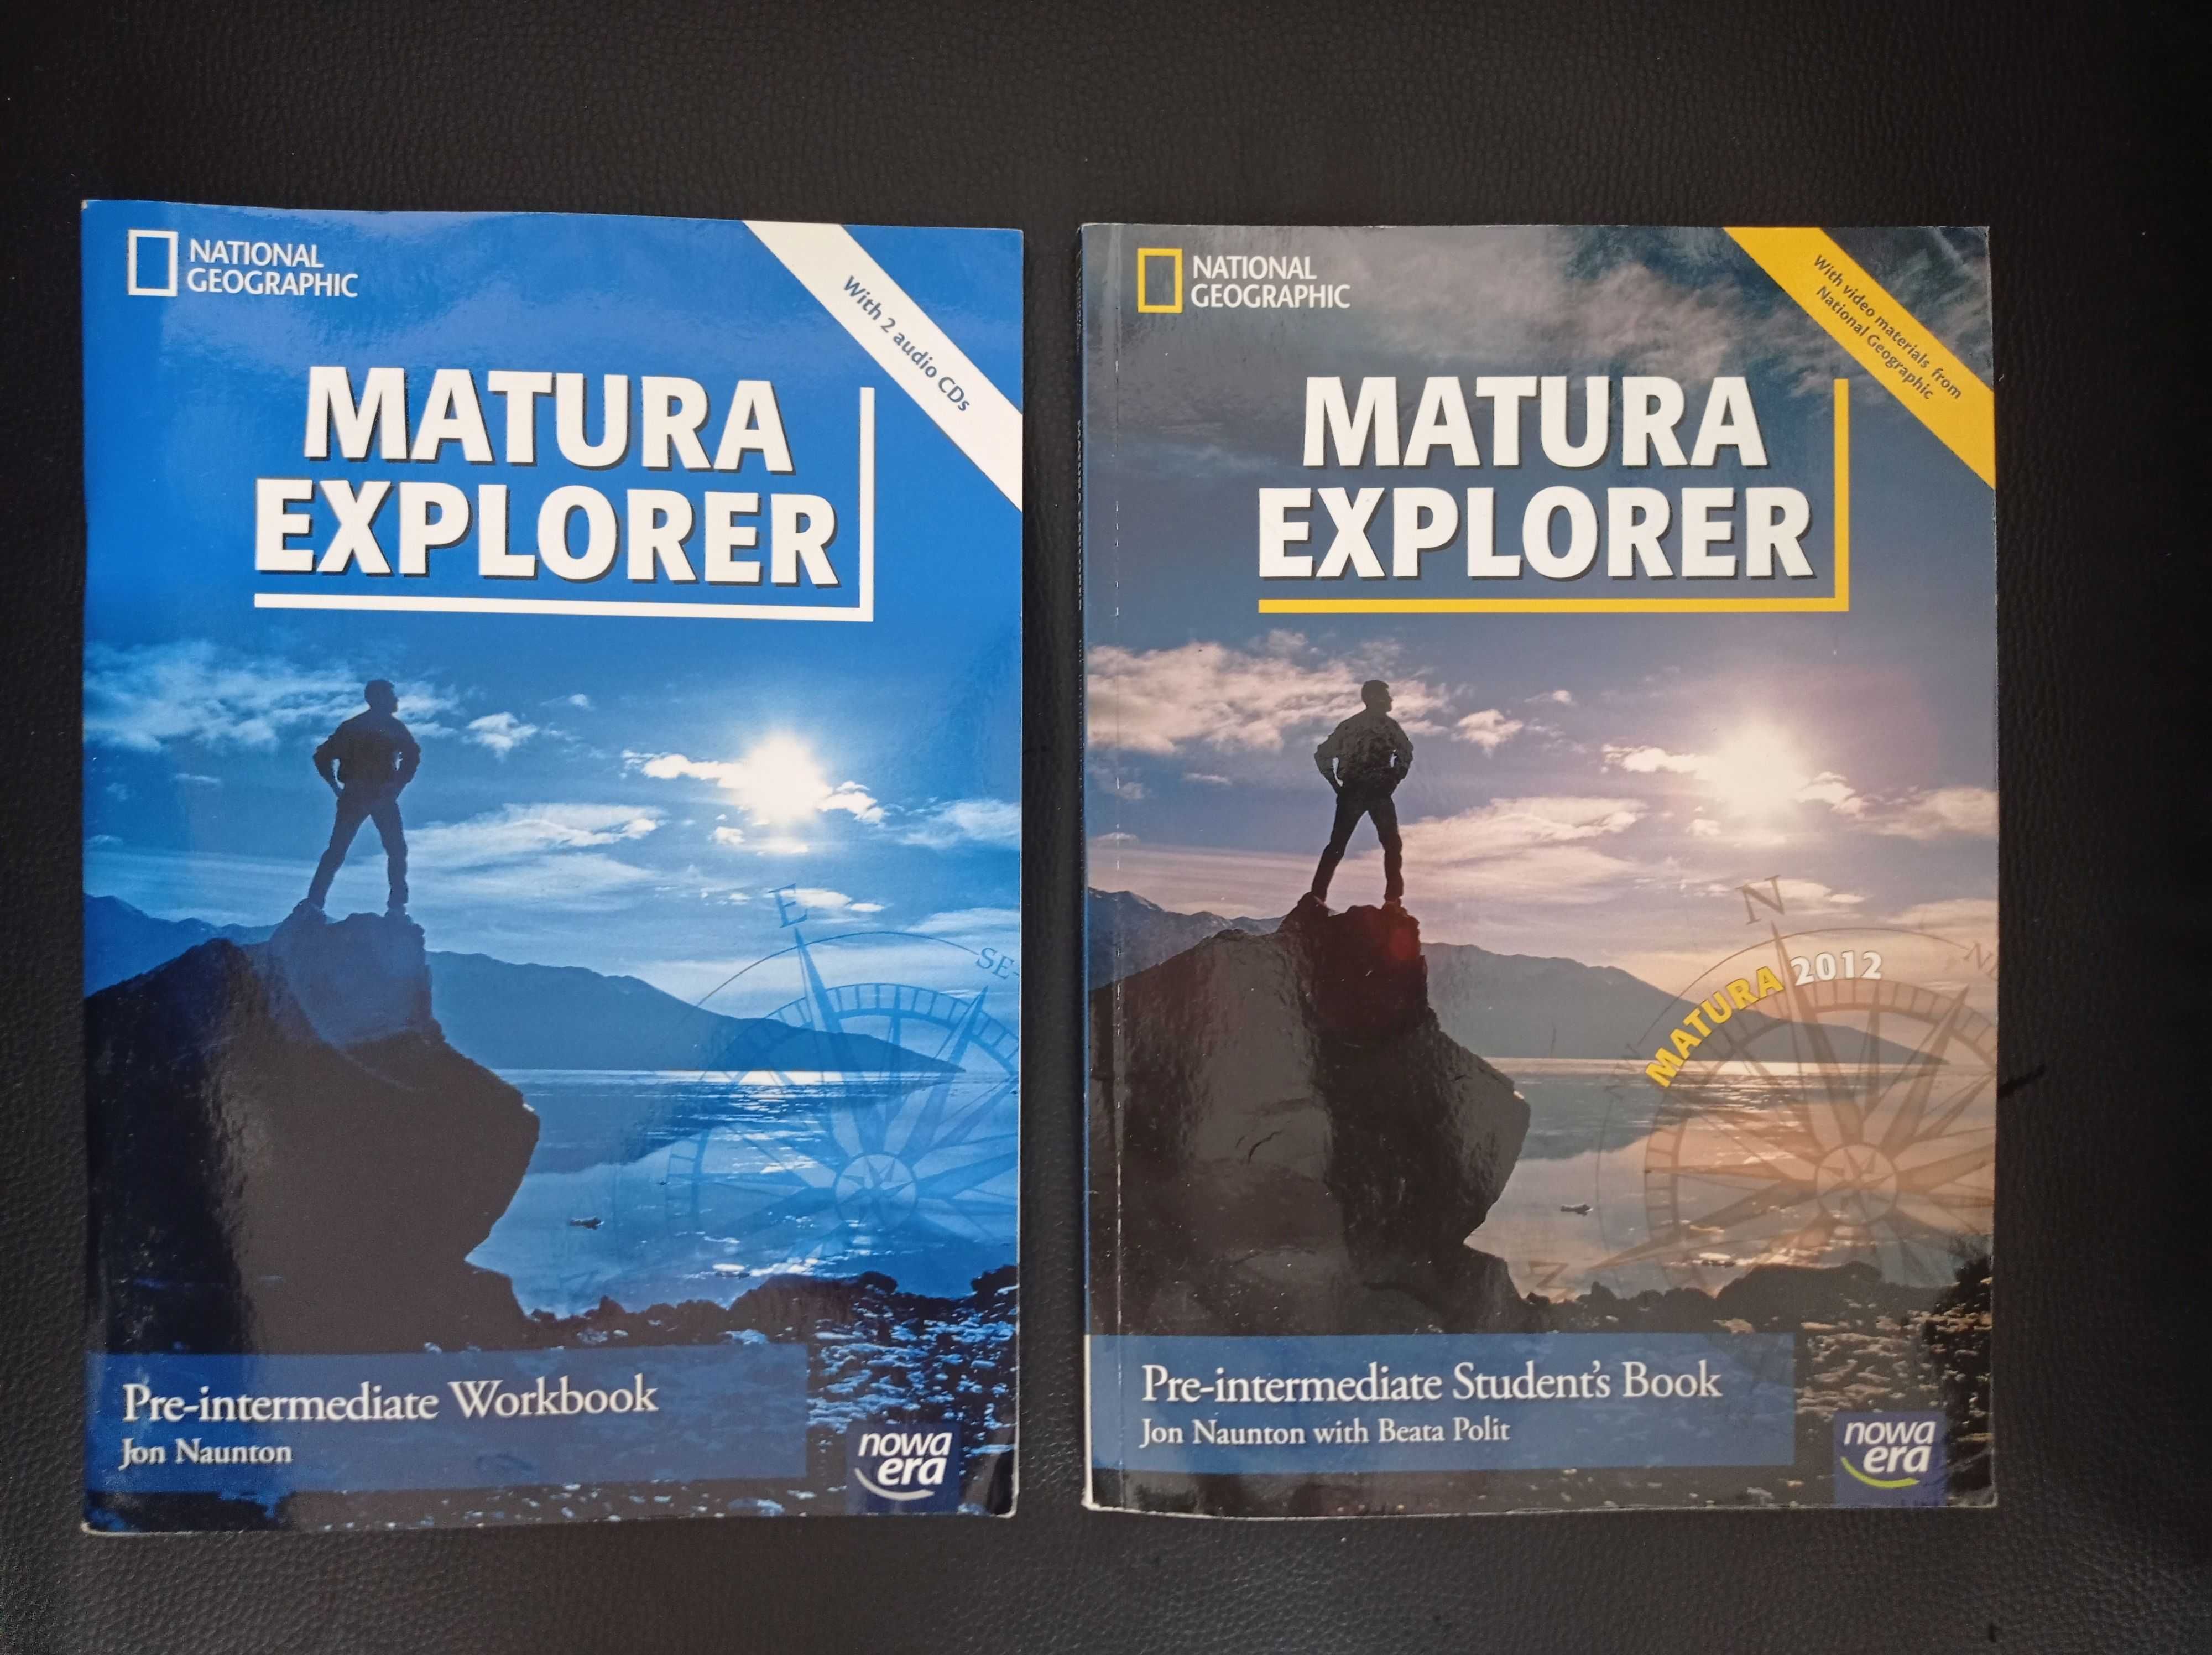 Matura Explorer - National Geographic